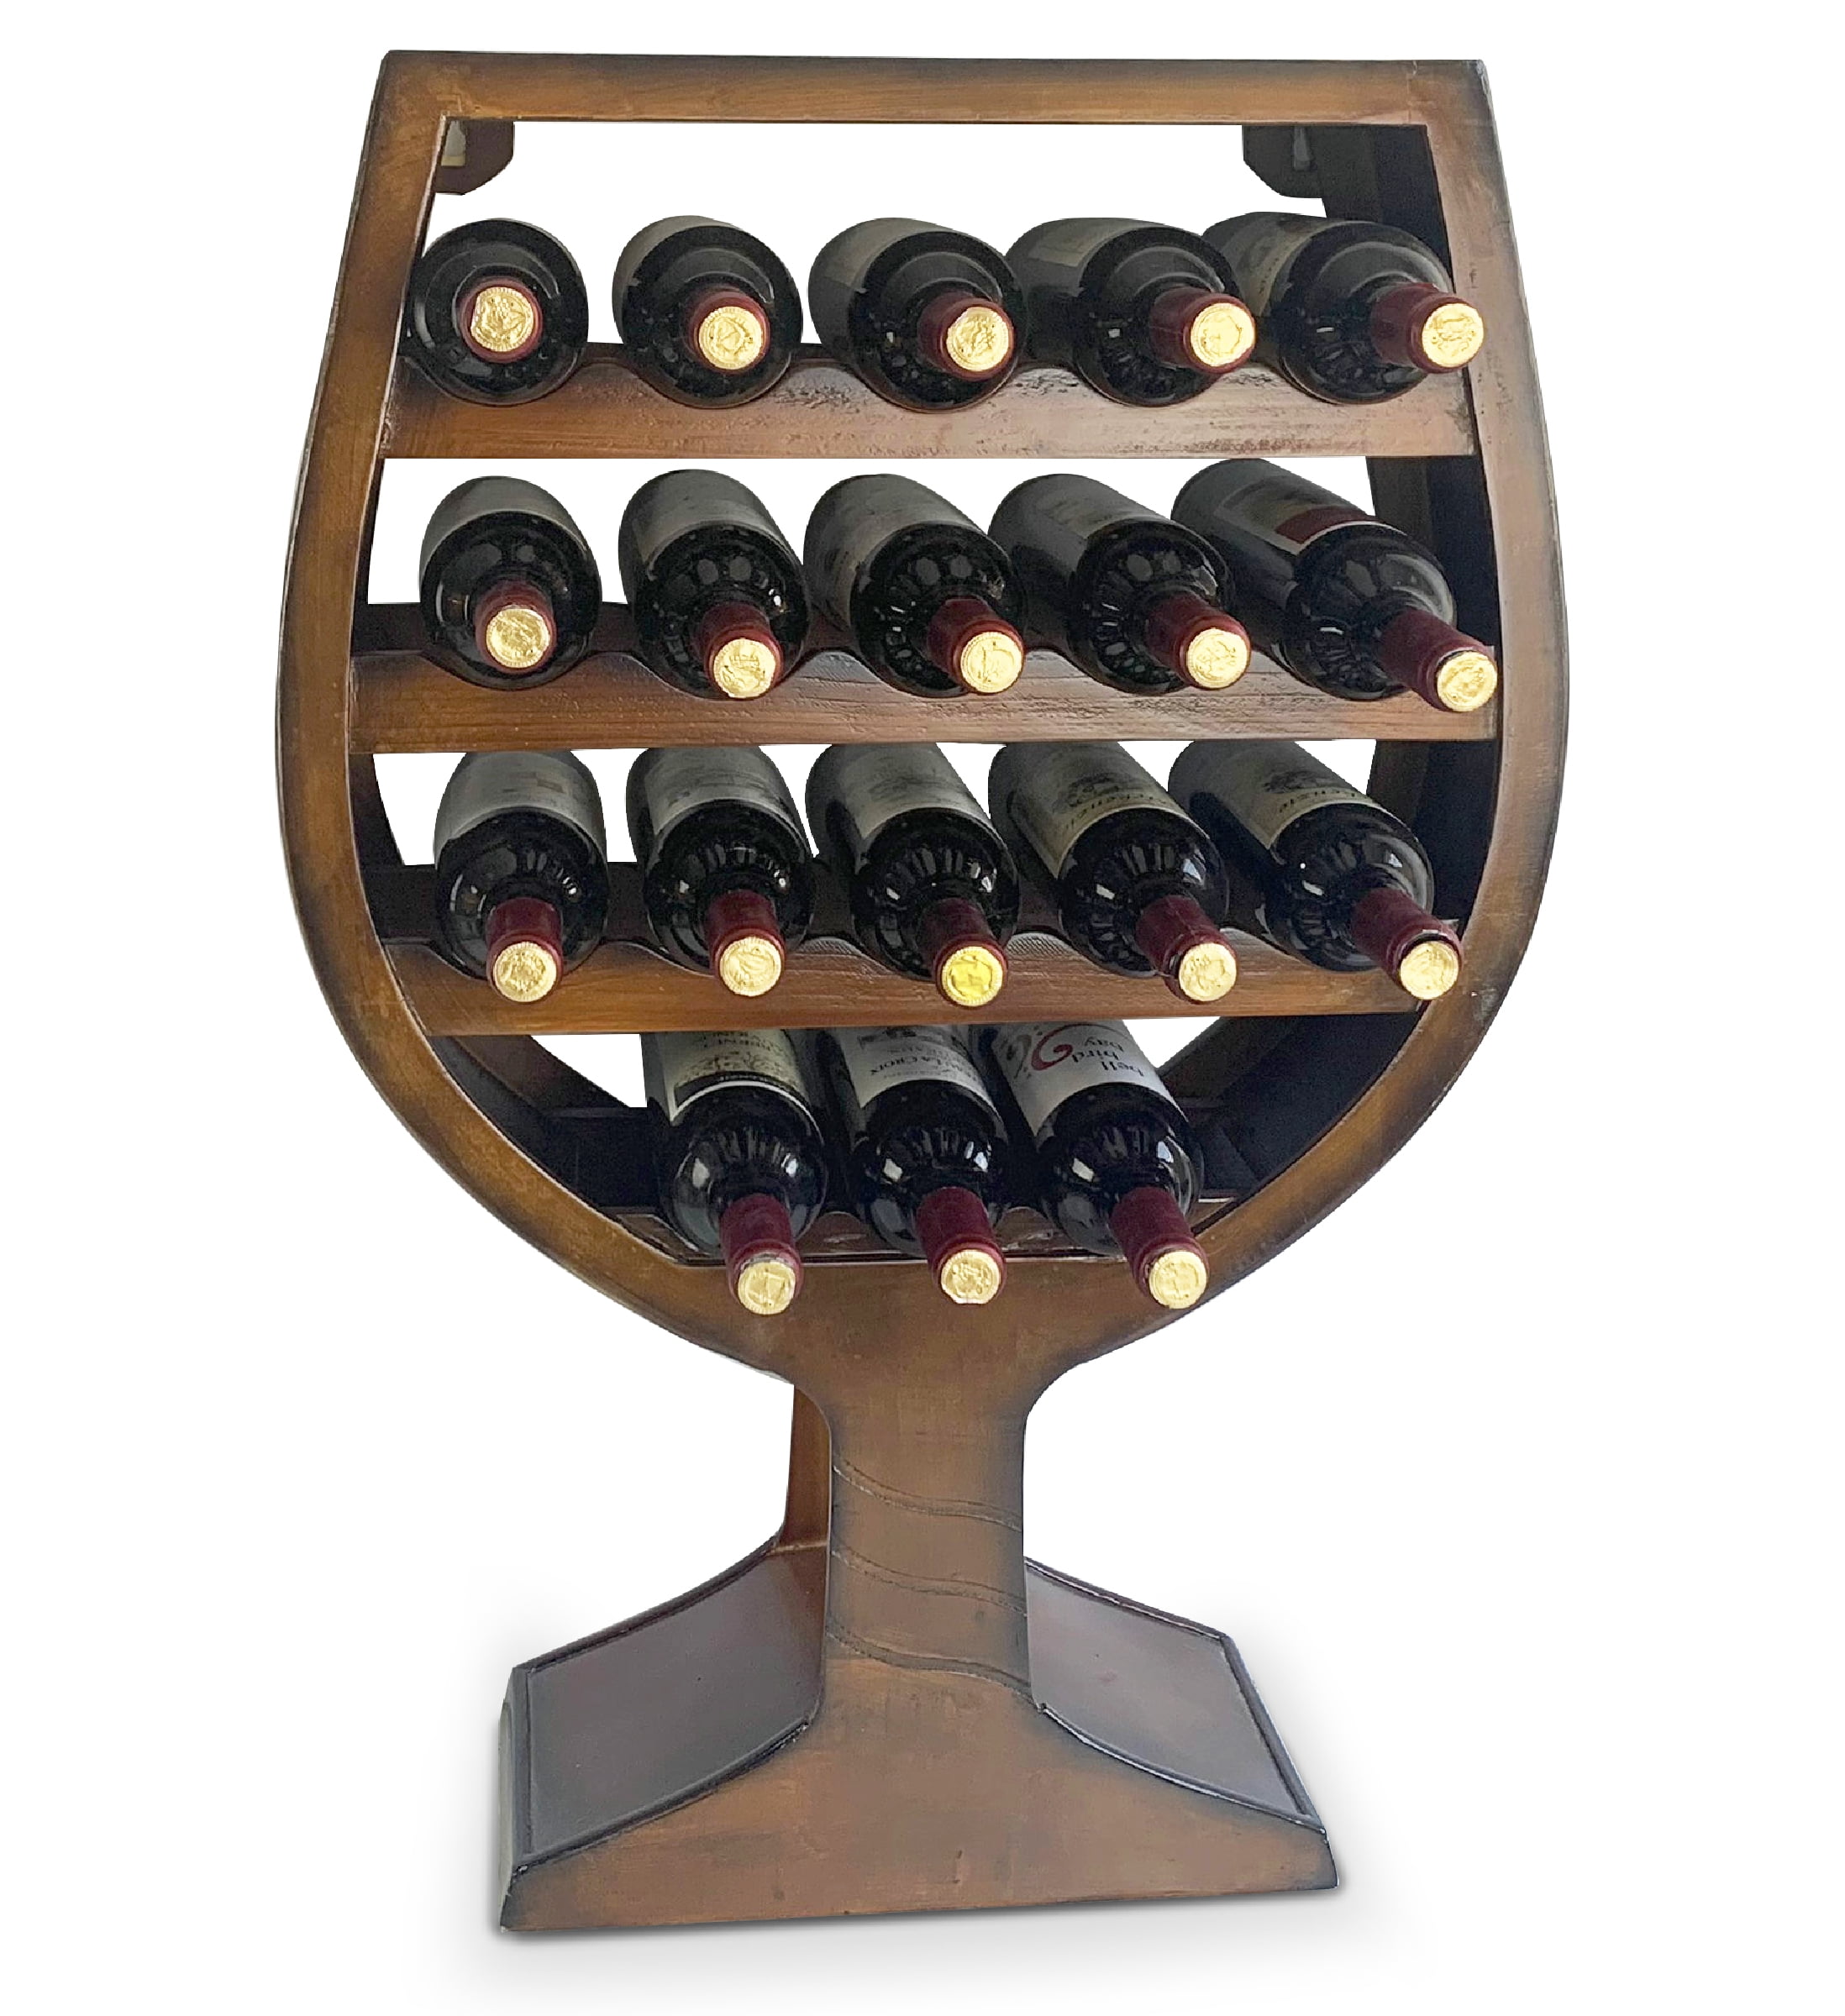 Color : A Wine Racks Wine Rack Free Standing Wine Holder Bottle Rack Floor Stand Storage Liquor Display to Decorate Home Bar Porch Accessory Wine Bottle Rack